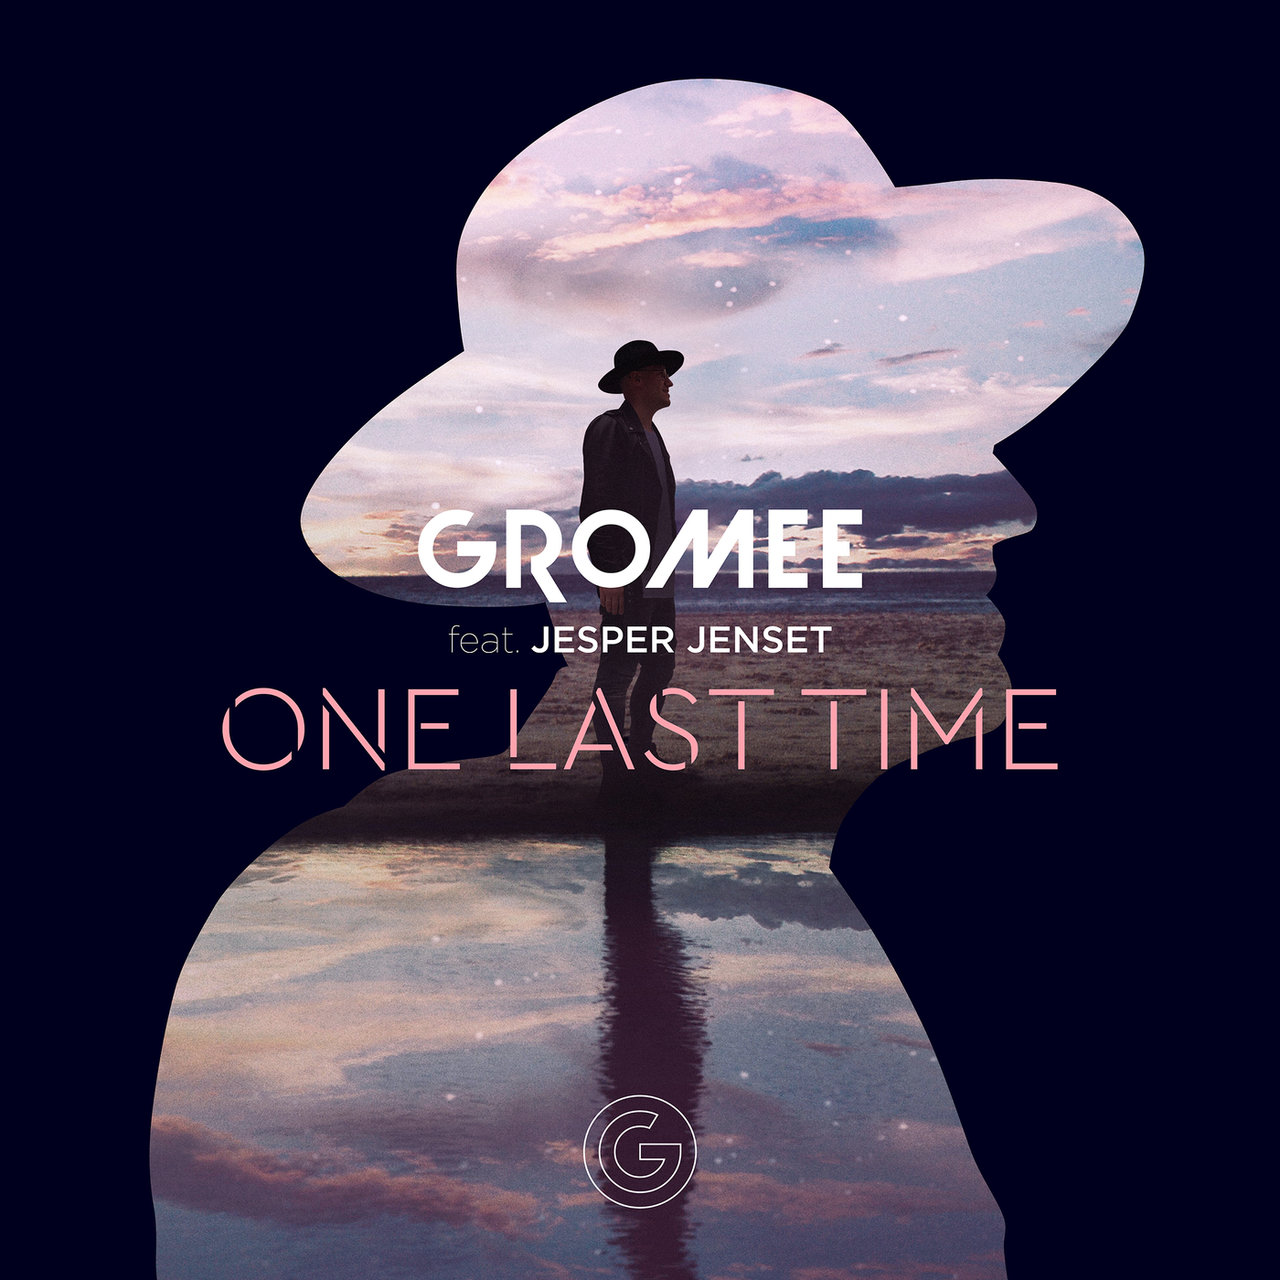 Gromee ft. featuring Jesper Jenset One Last Time cover artwork